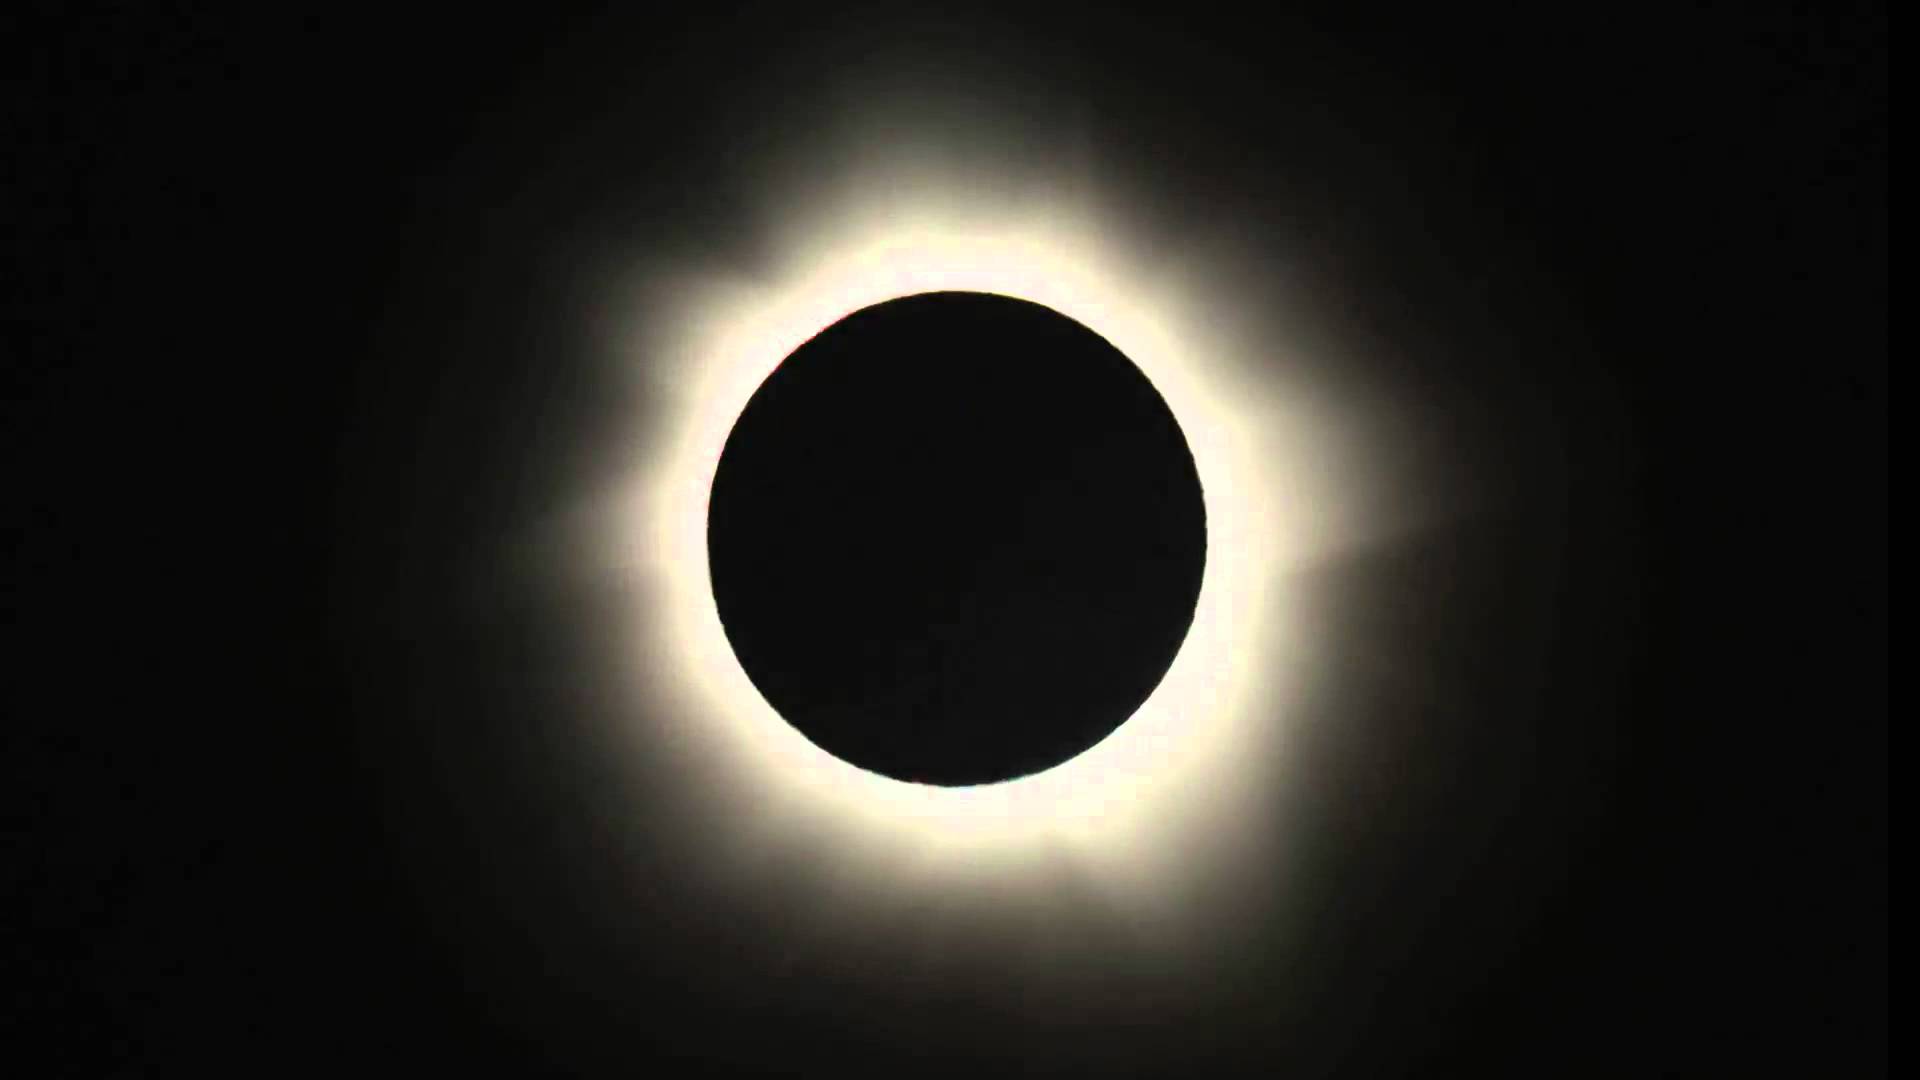 Partial Solar Eclipse Time Laps HD Wallpaper, Background Image